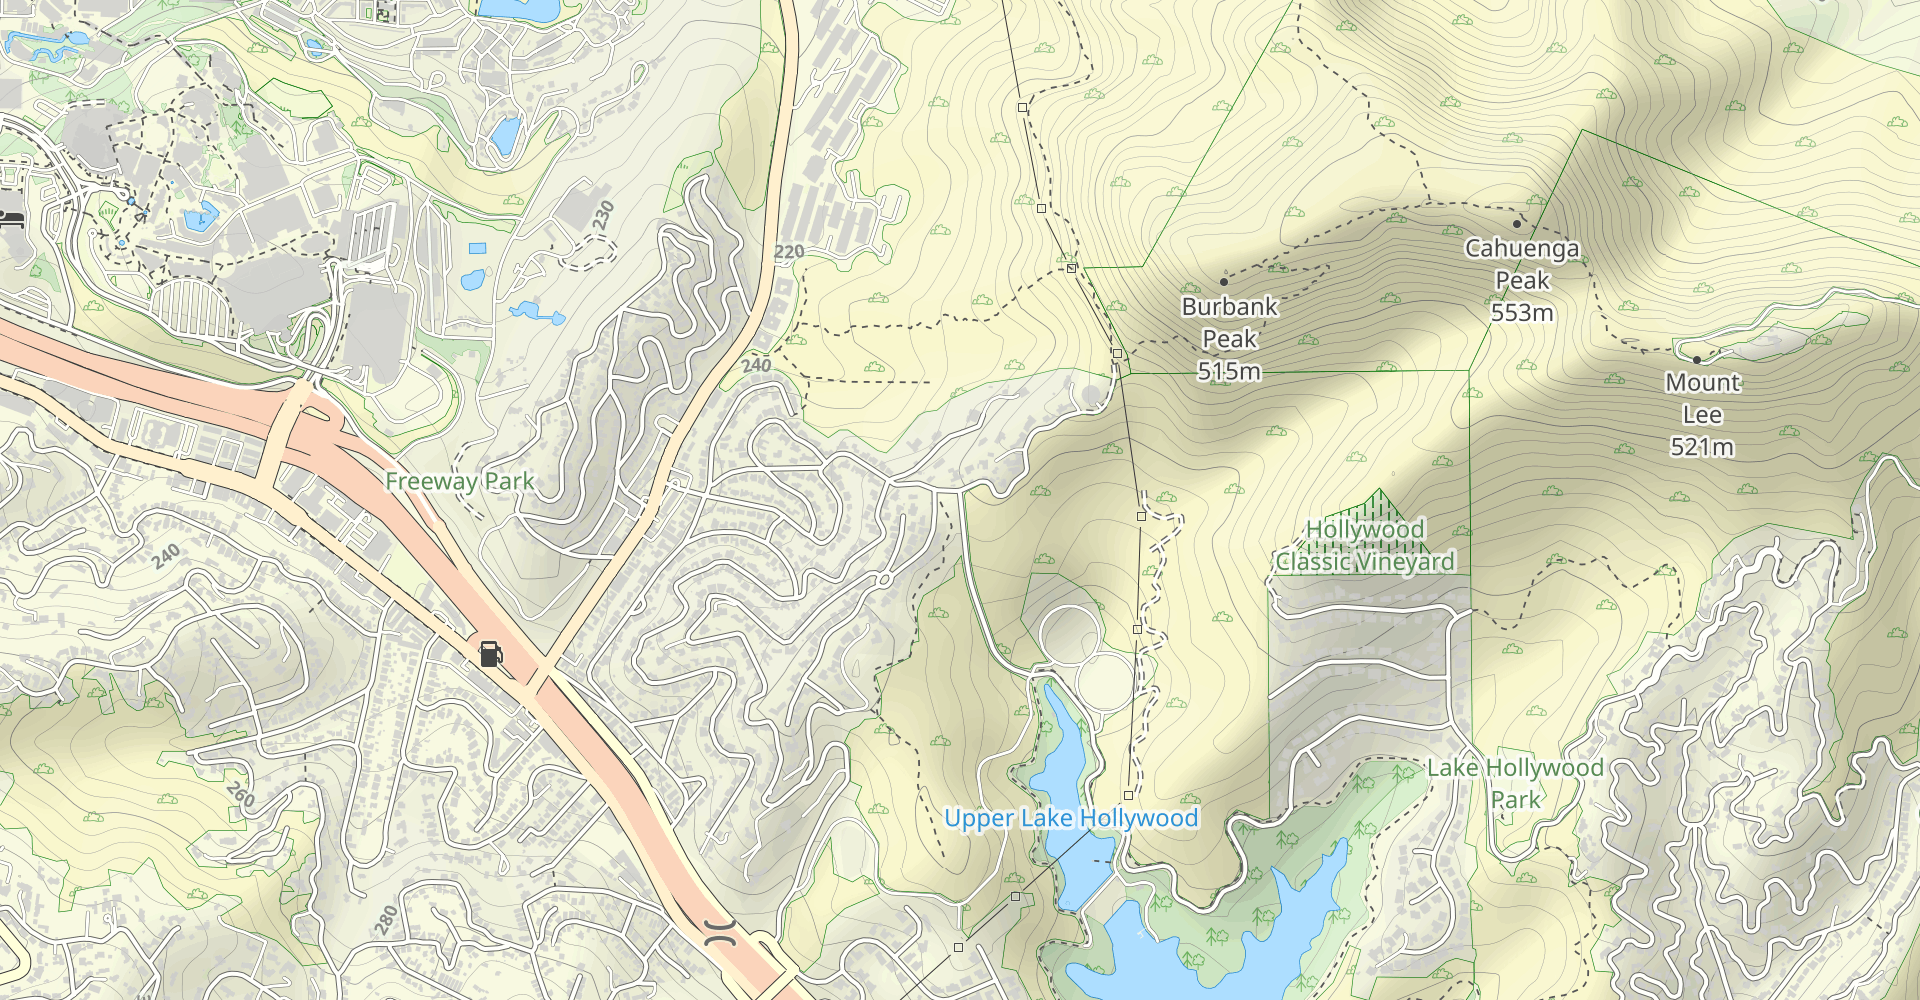 Burbank Peak to Hollywood Sign to Upper Lake Hollywood Loop